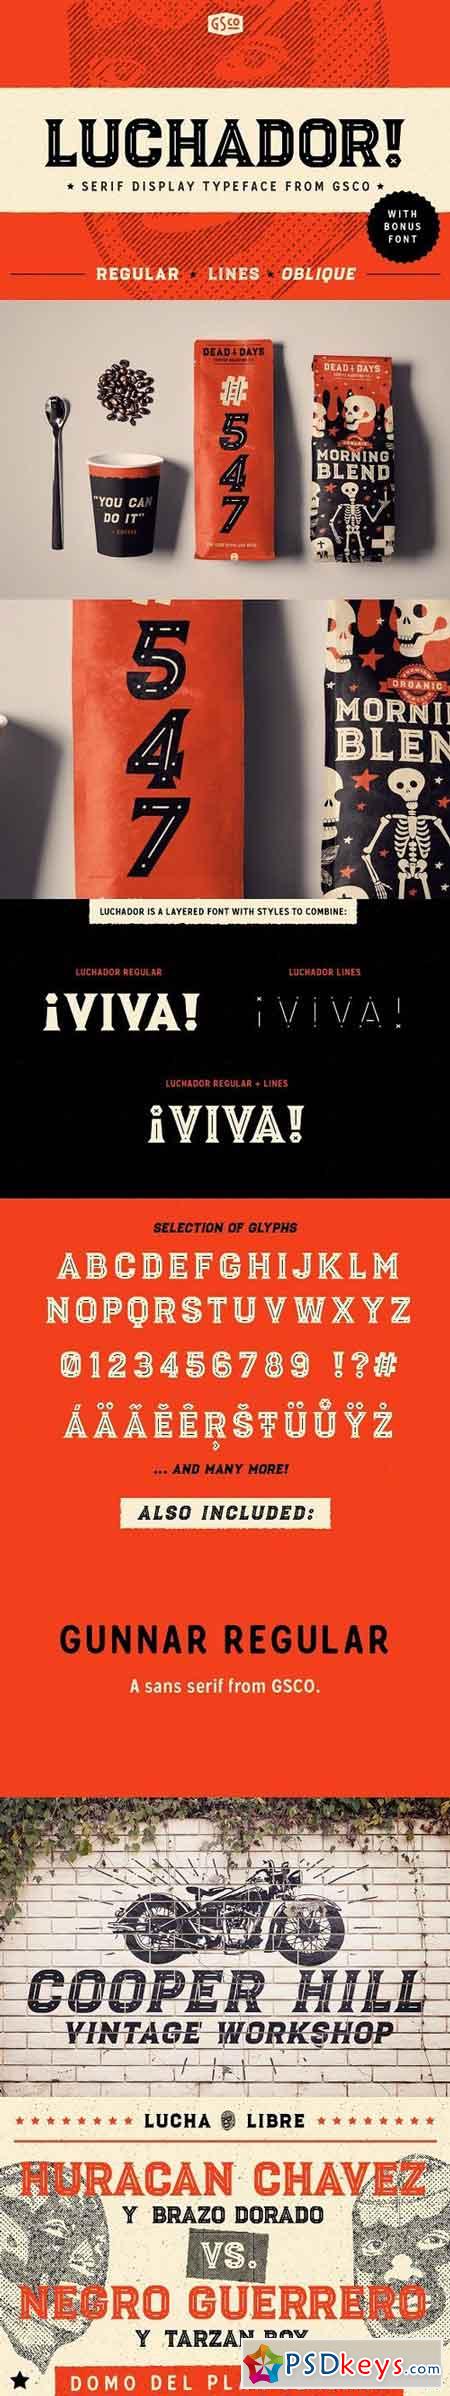 Luchador - Serif display typeface 1412527